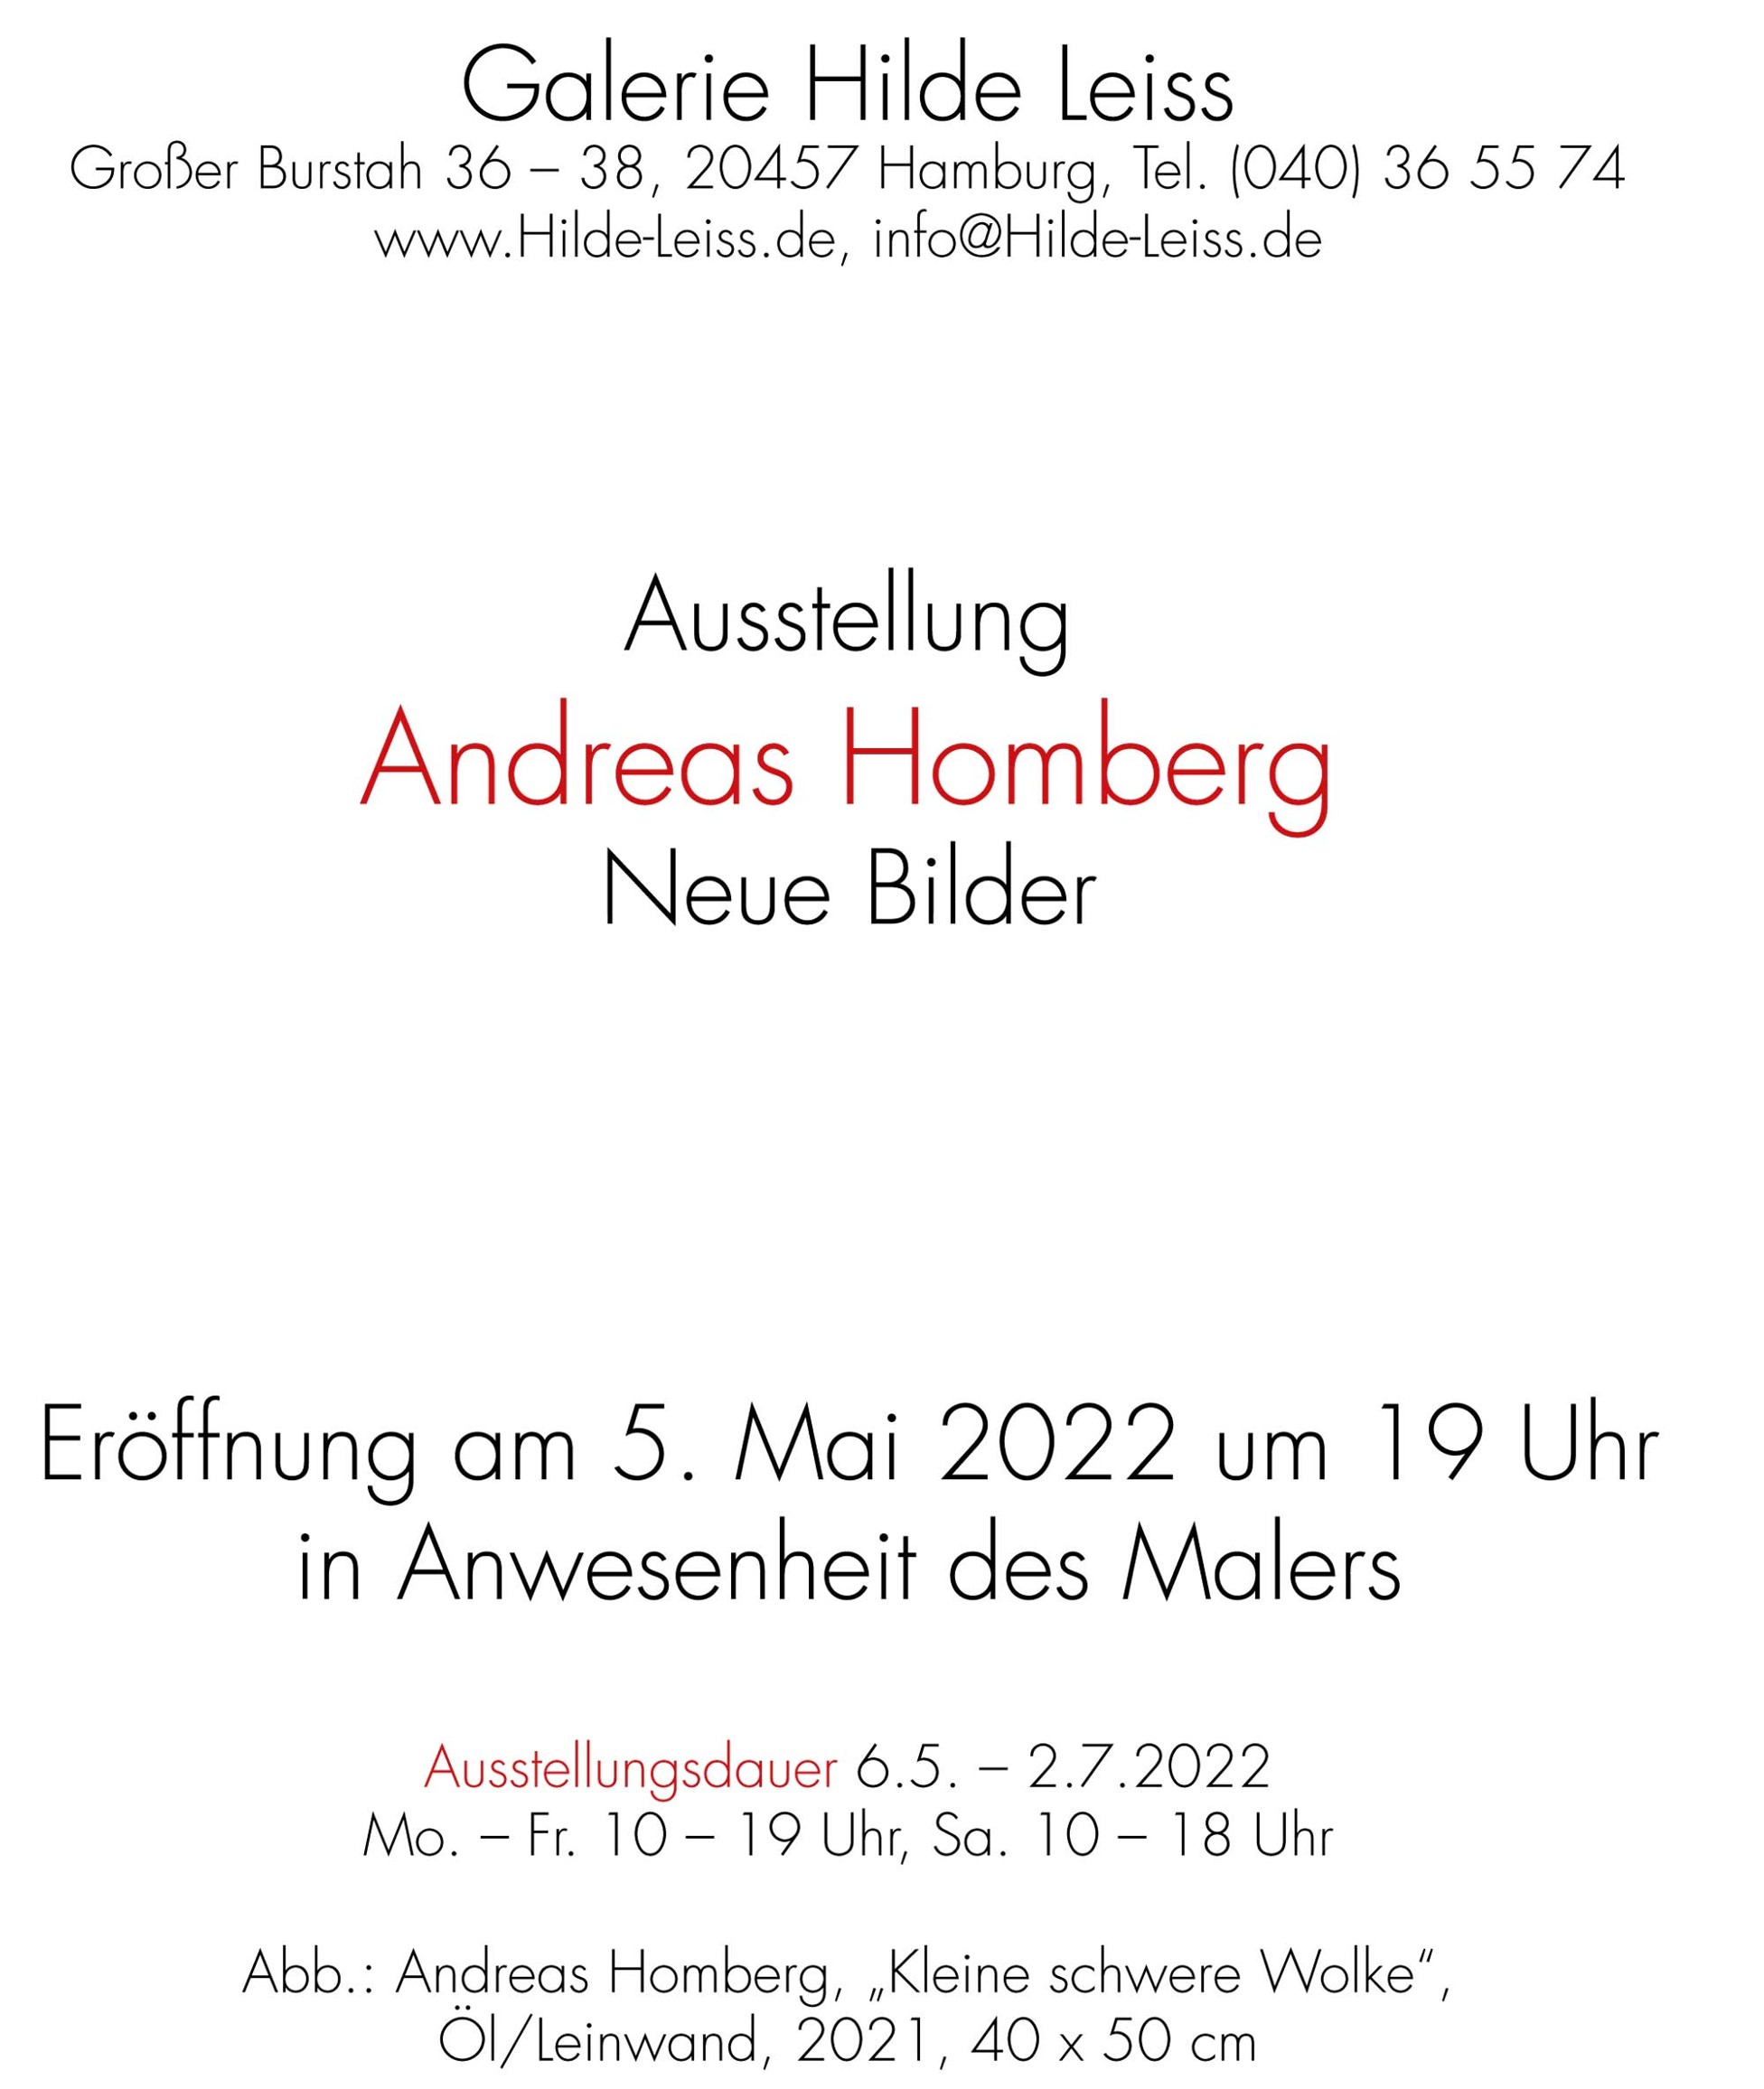 Galerie Hilde Leiss, 05. Mai 2022